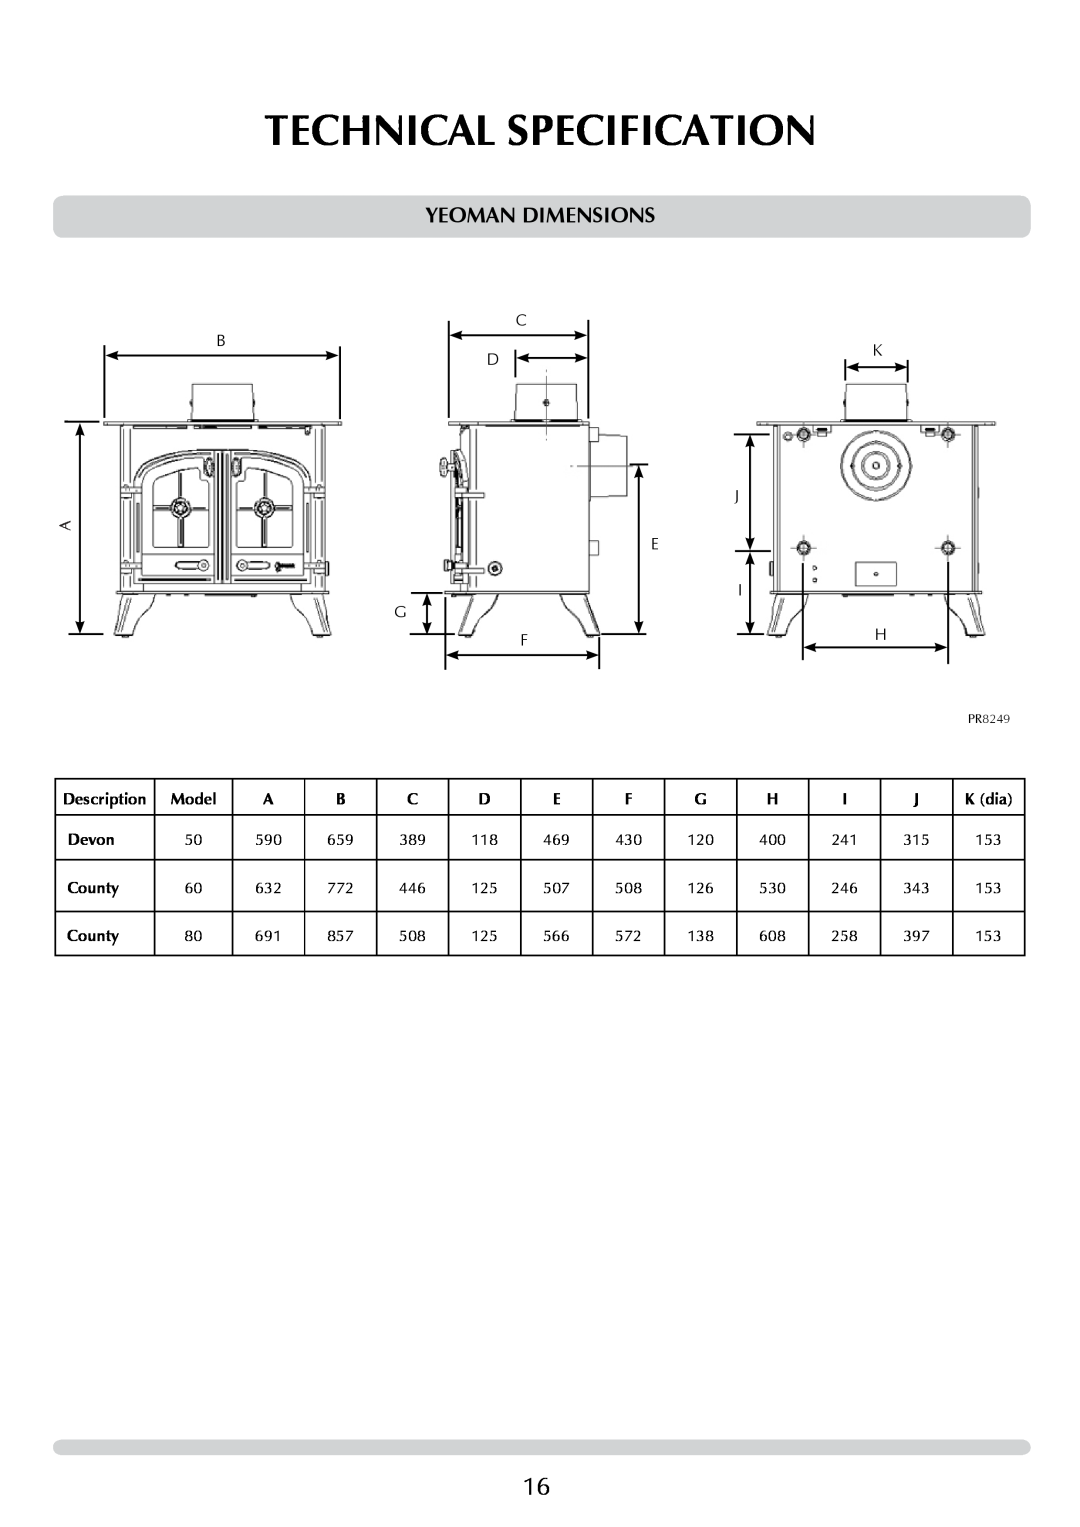 Yeoman DEVON 50 manual Yeoman Dimensions, Technical Specification 